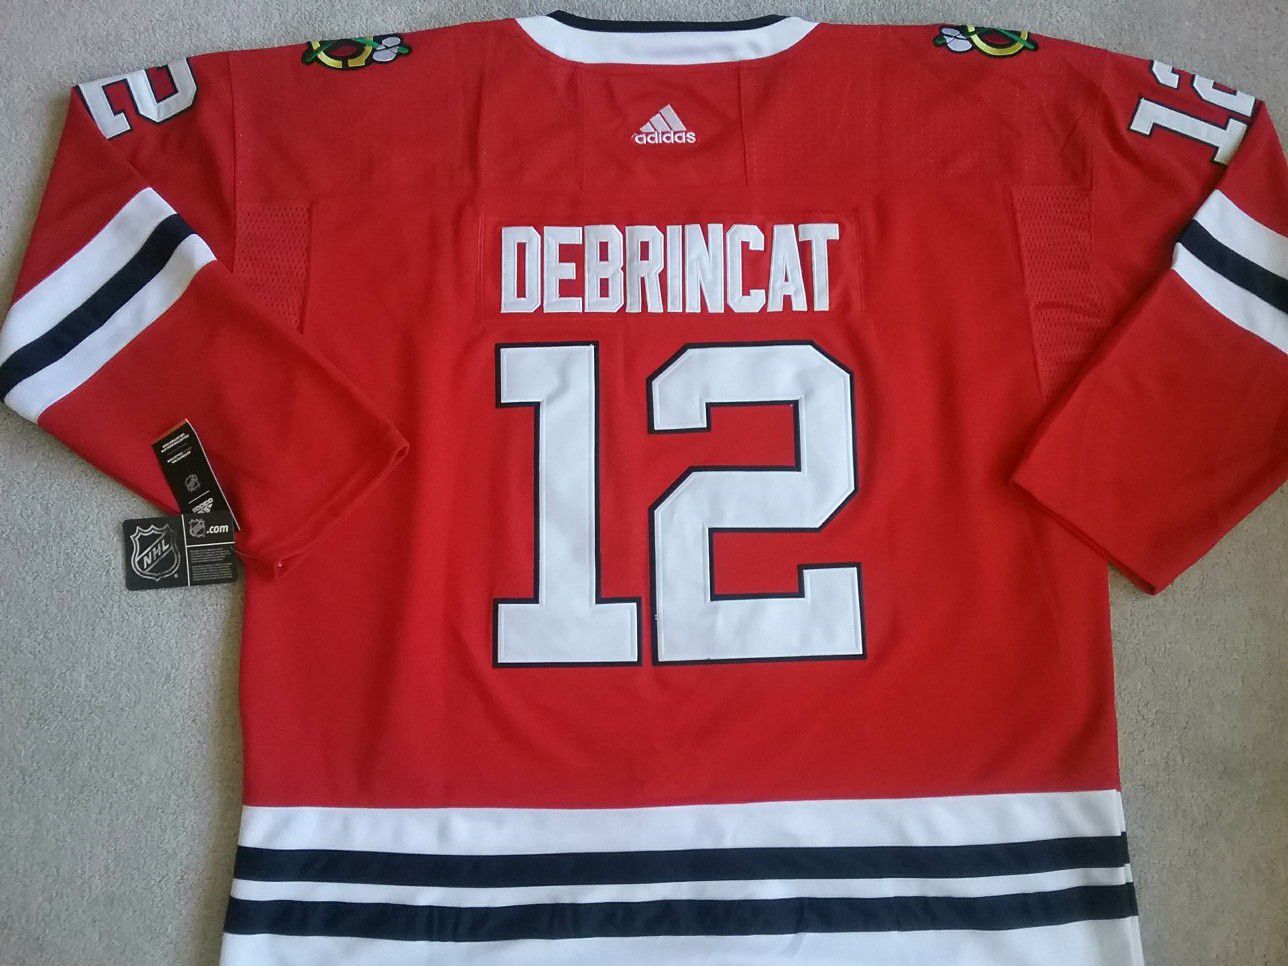 (XL) Chicago Blackhawks #12 Debrincat Size 54 XL